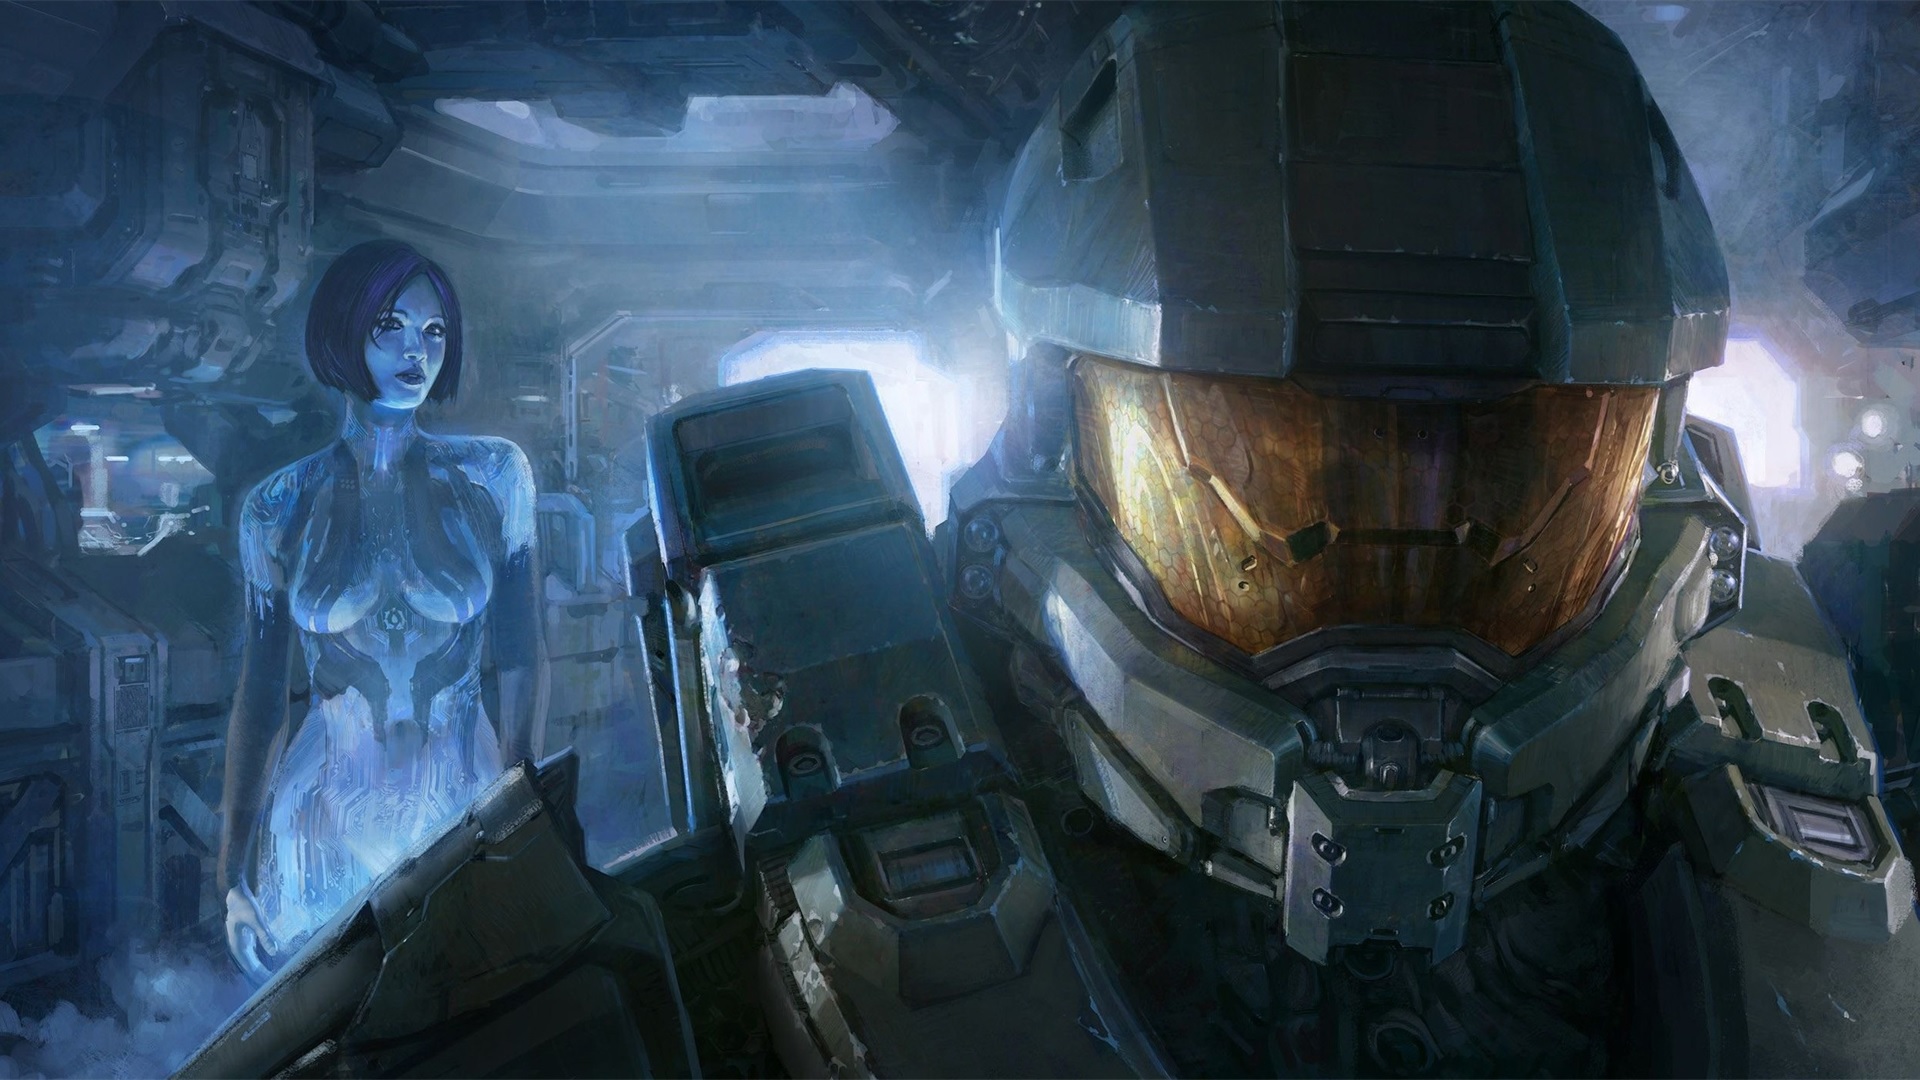 Halo 4 concept art of Master Chief and Cortana by John Wallin Liberto